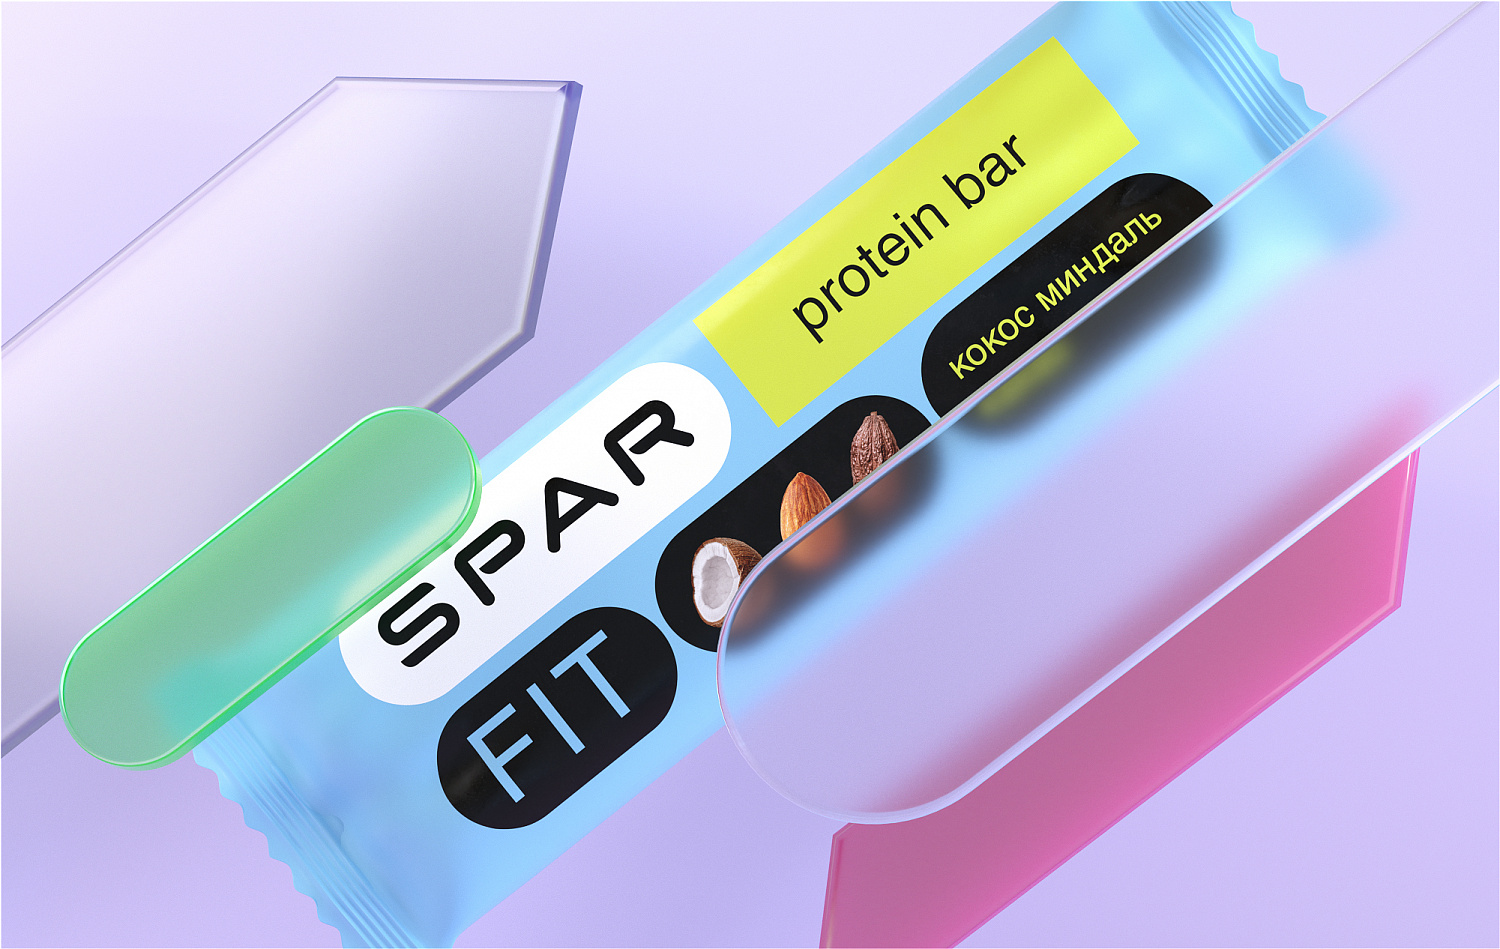 SPAR Fit - Портфолио Depot